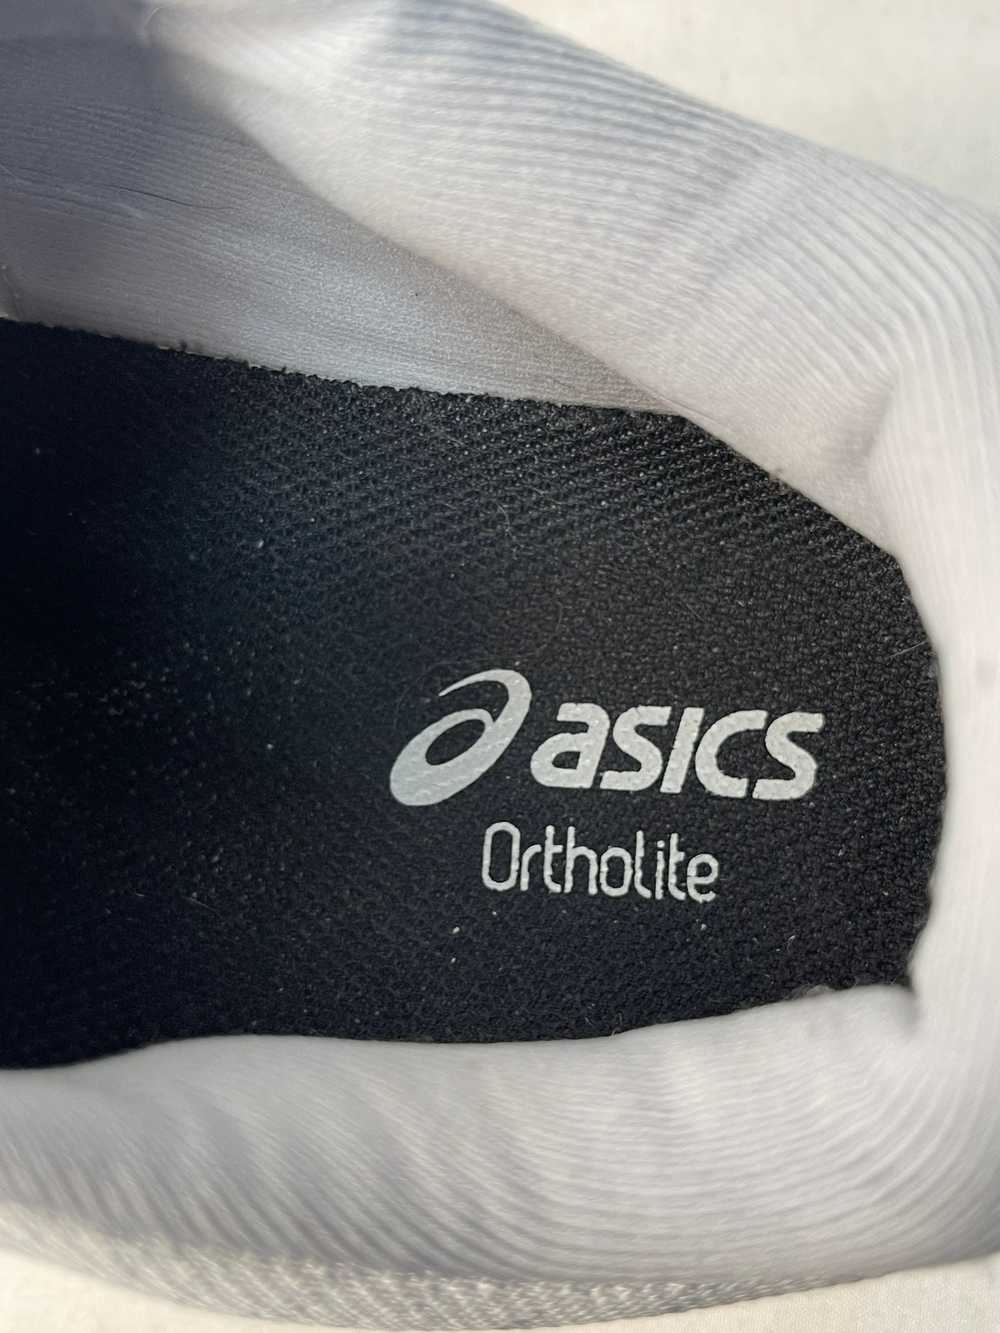 Asics Women's Gray Ortholite Sneakers Size 10 - image 5